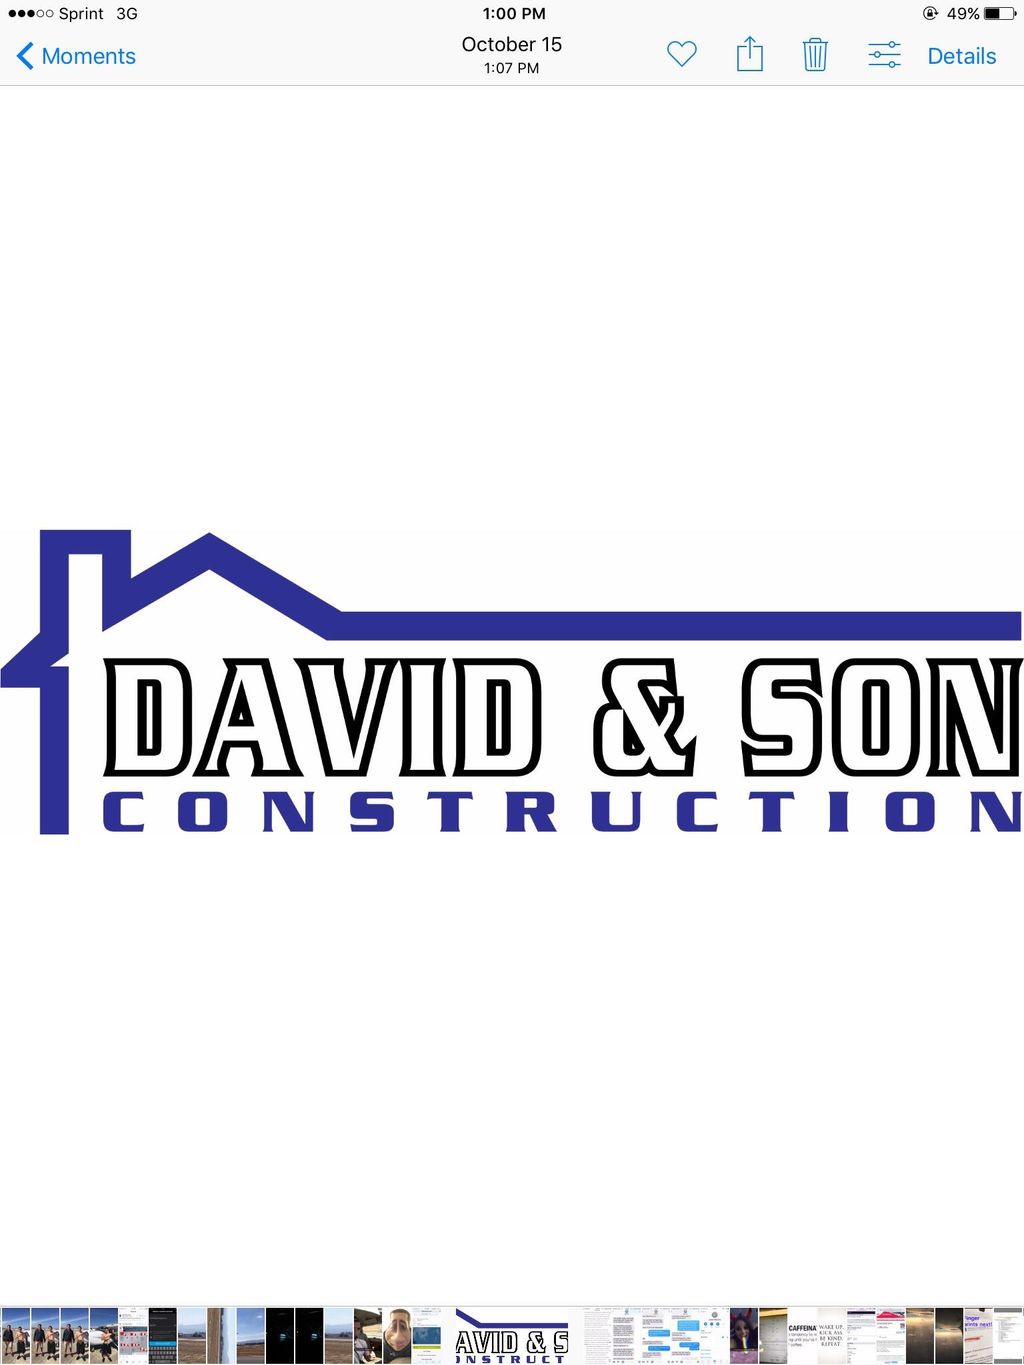 David & Son Construction